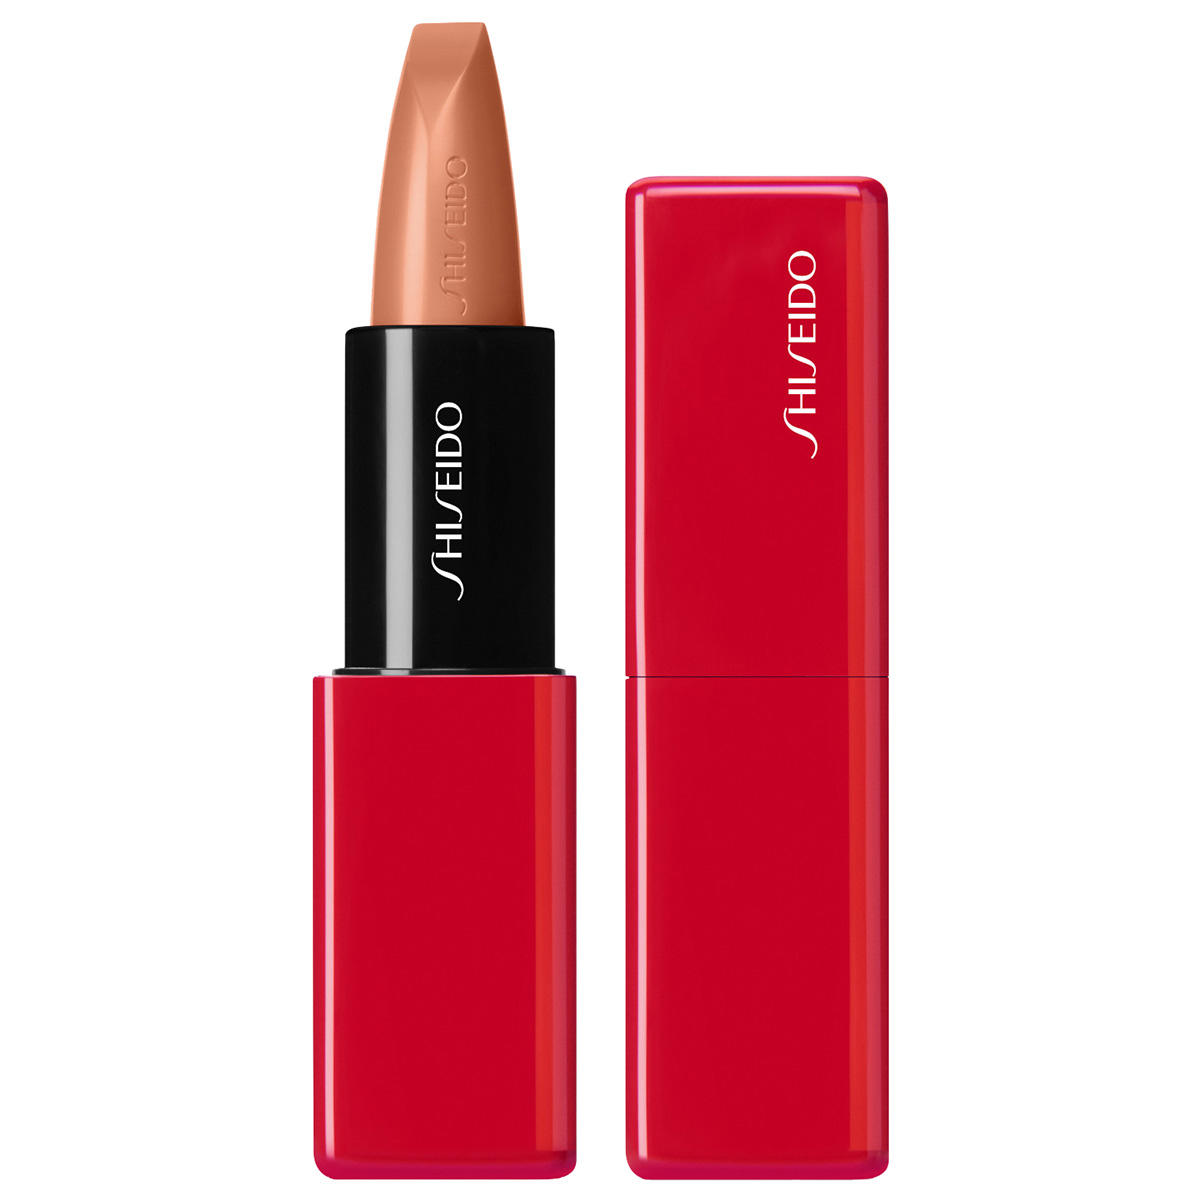 Shiseido TechnoSatin Gel Lipstick 403 AUGMENTED NUDE 4 g NUDO AUGMENTATO